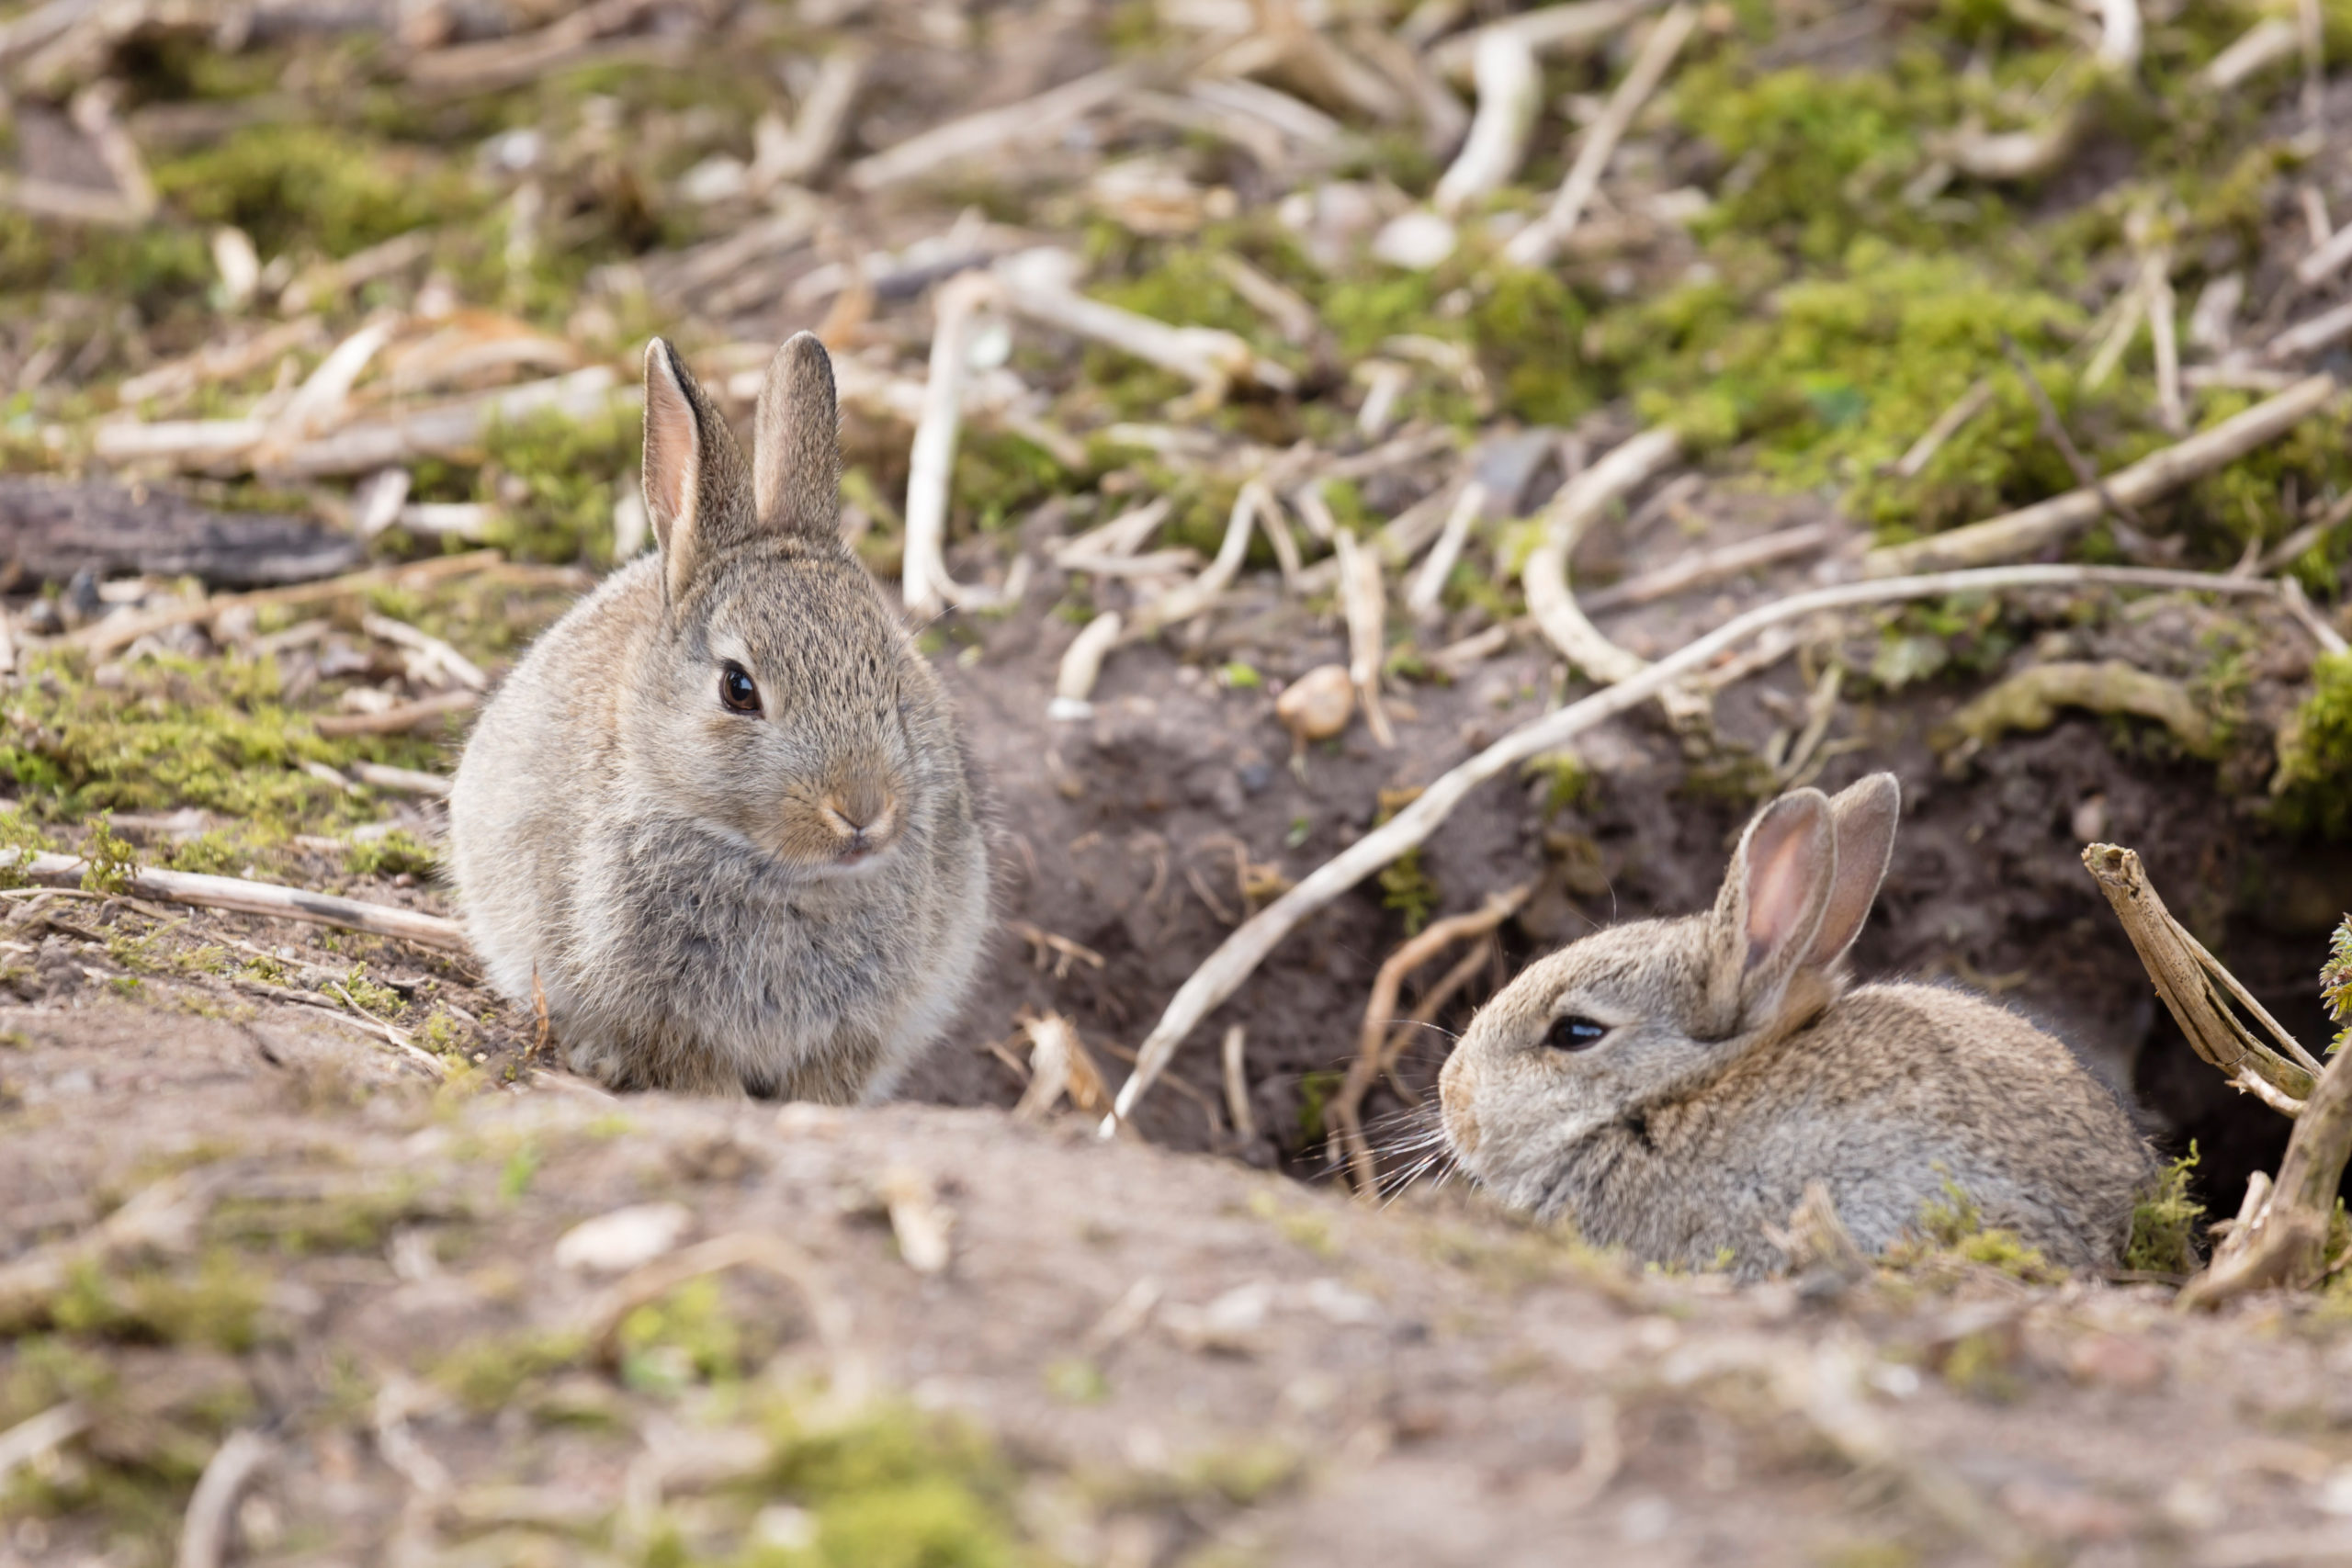 Camouflaged rabbits